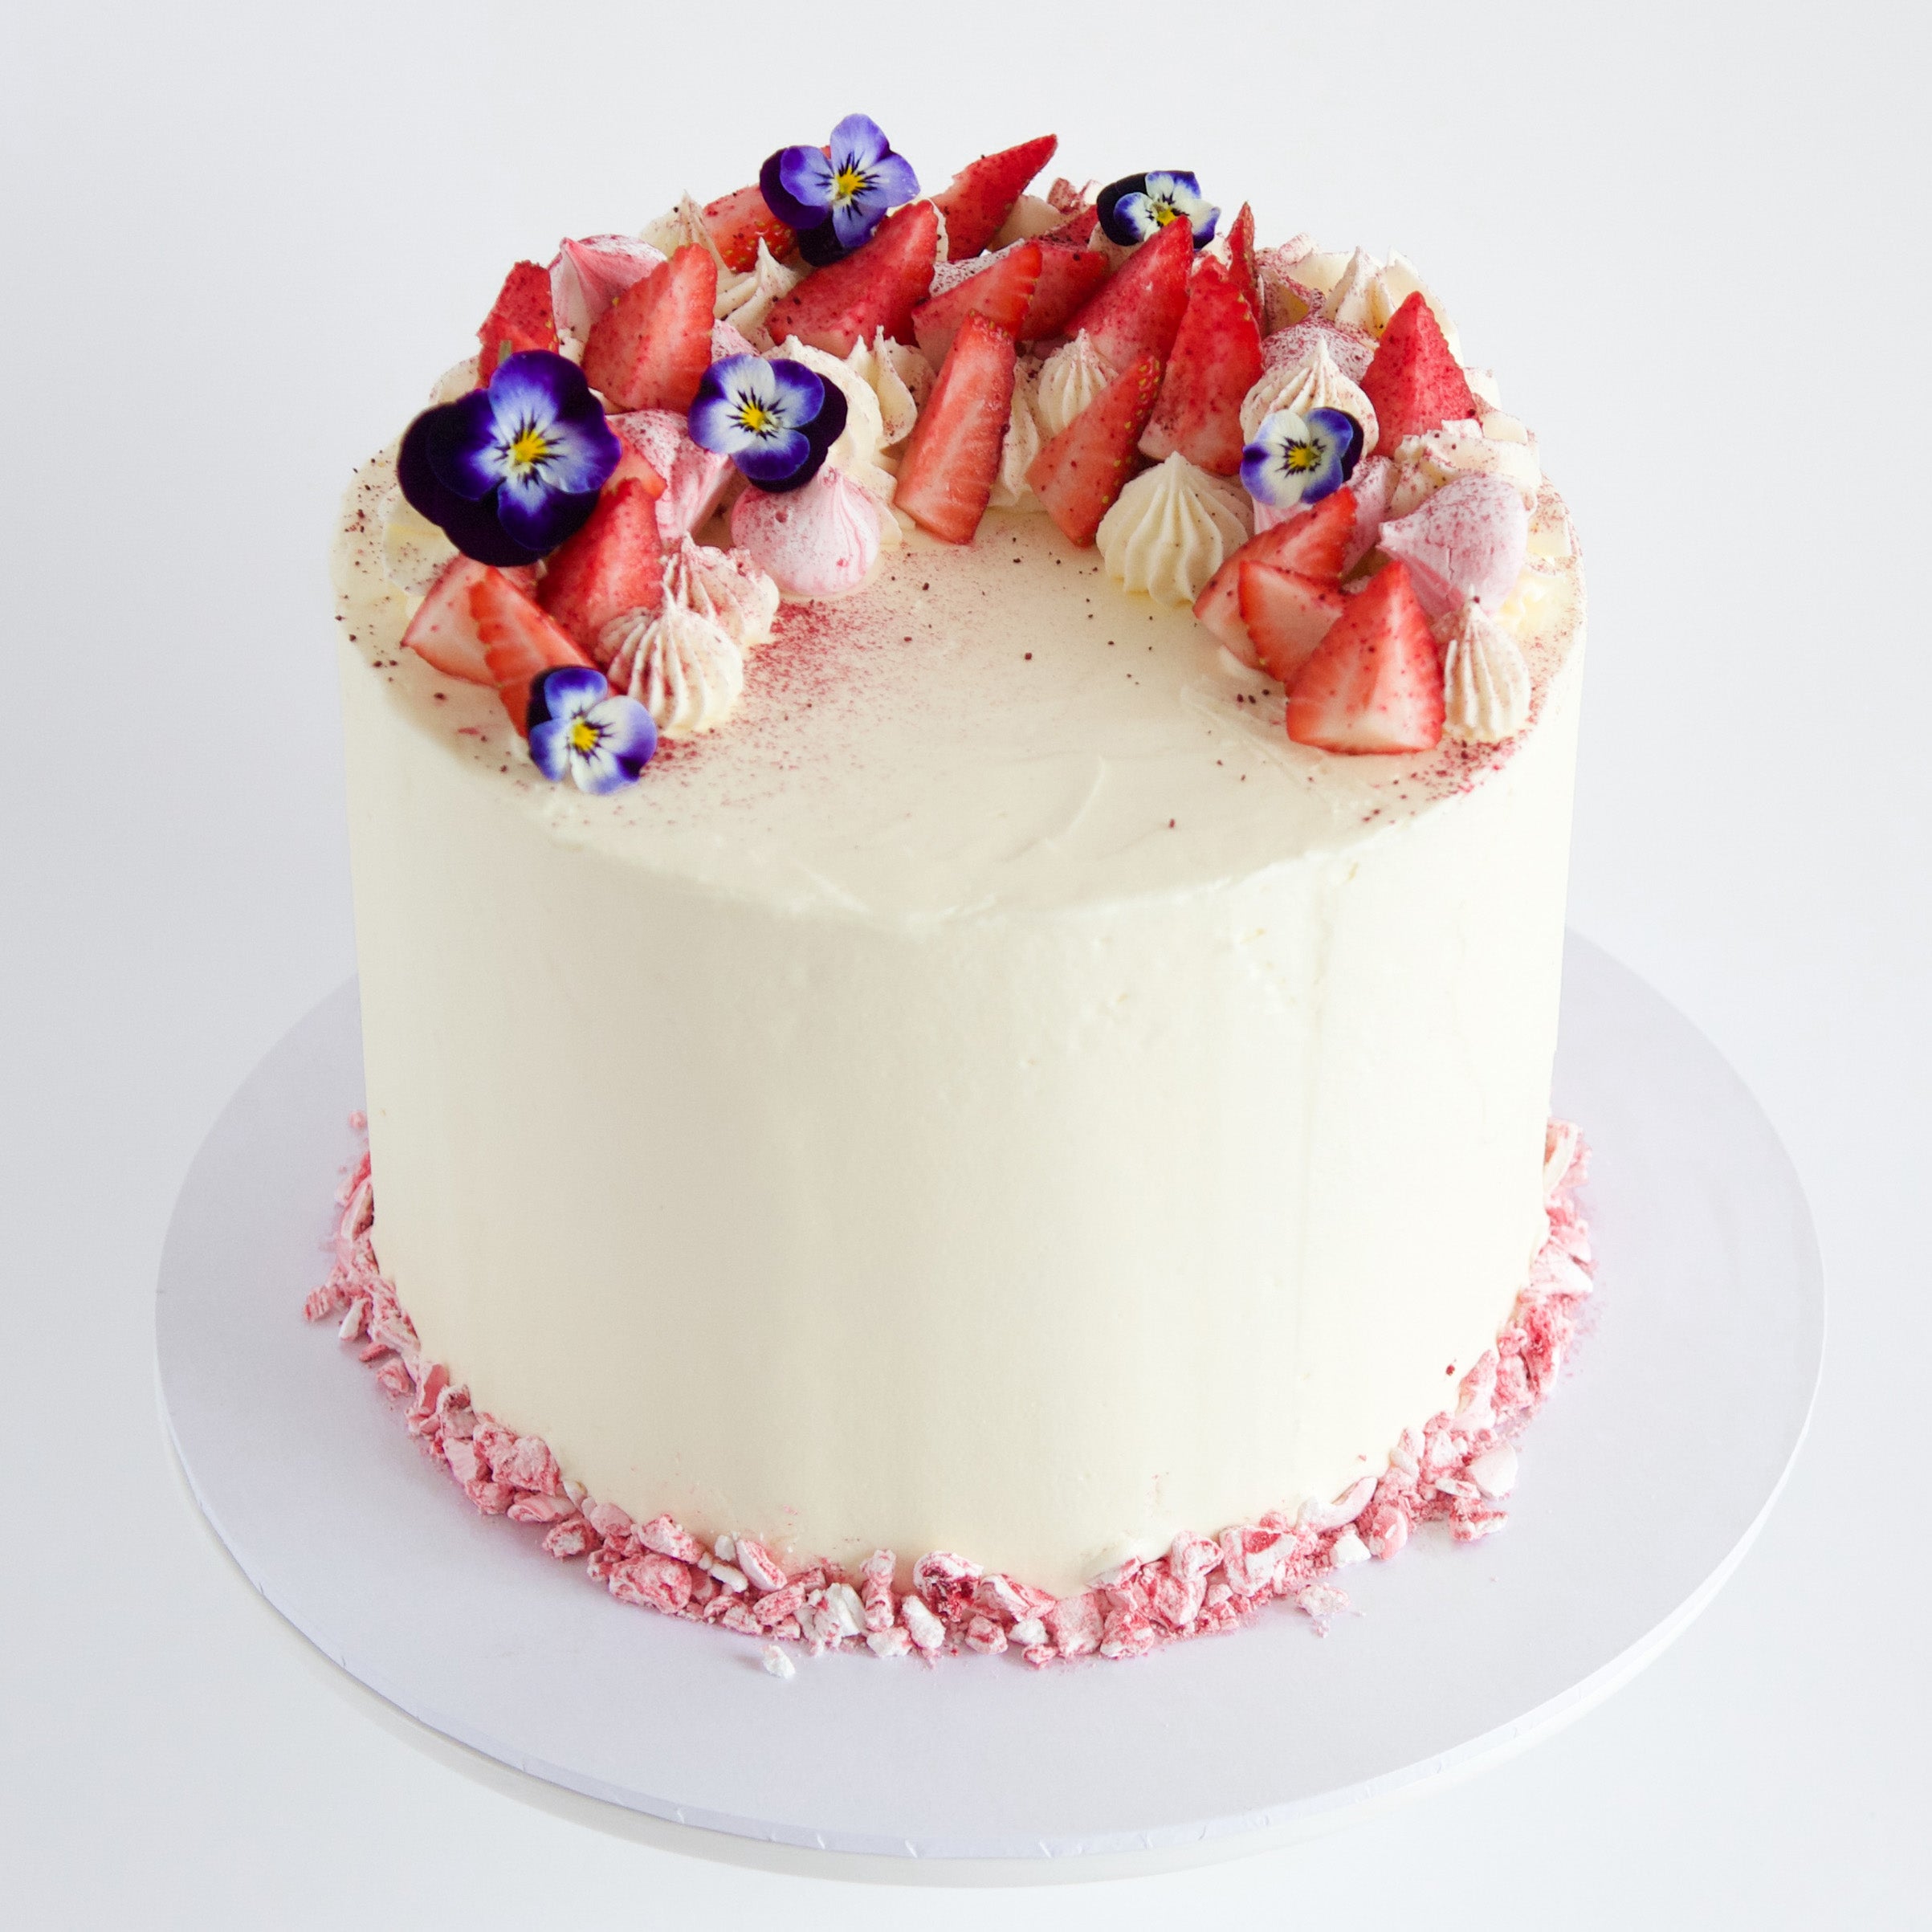 The best birthday cakes in London | CN Traveller